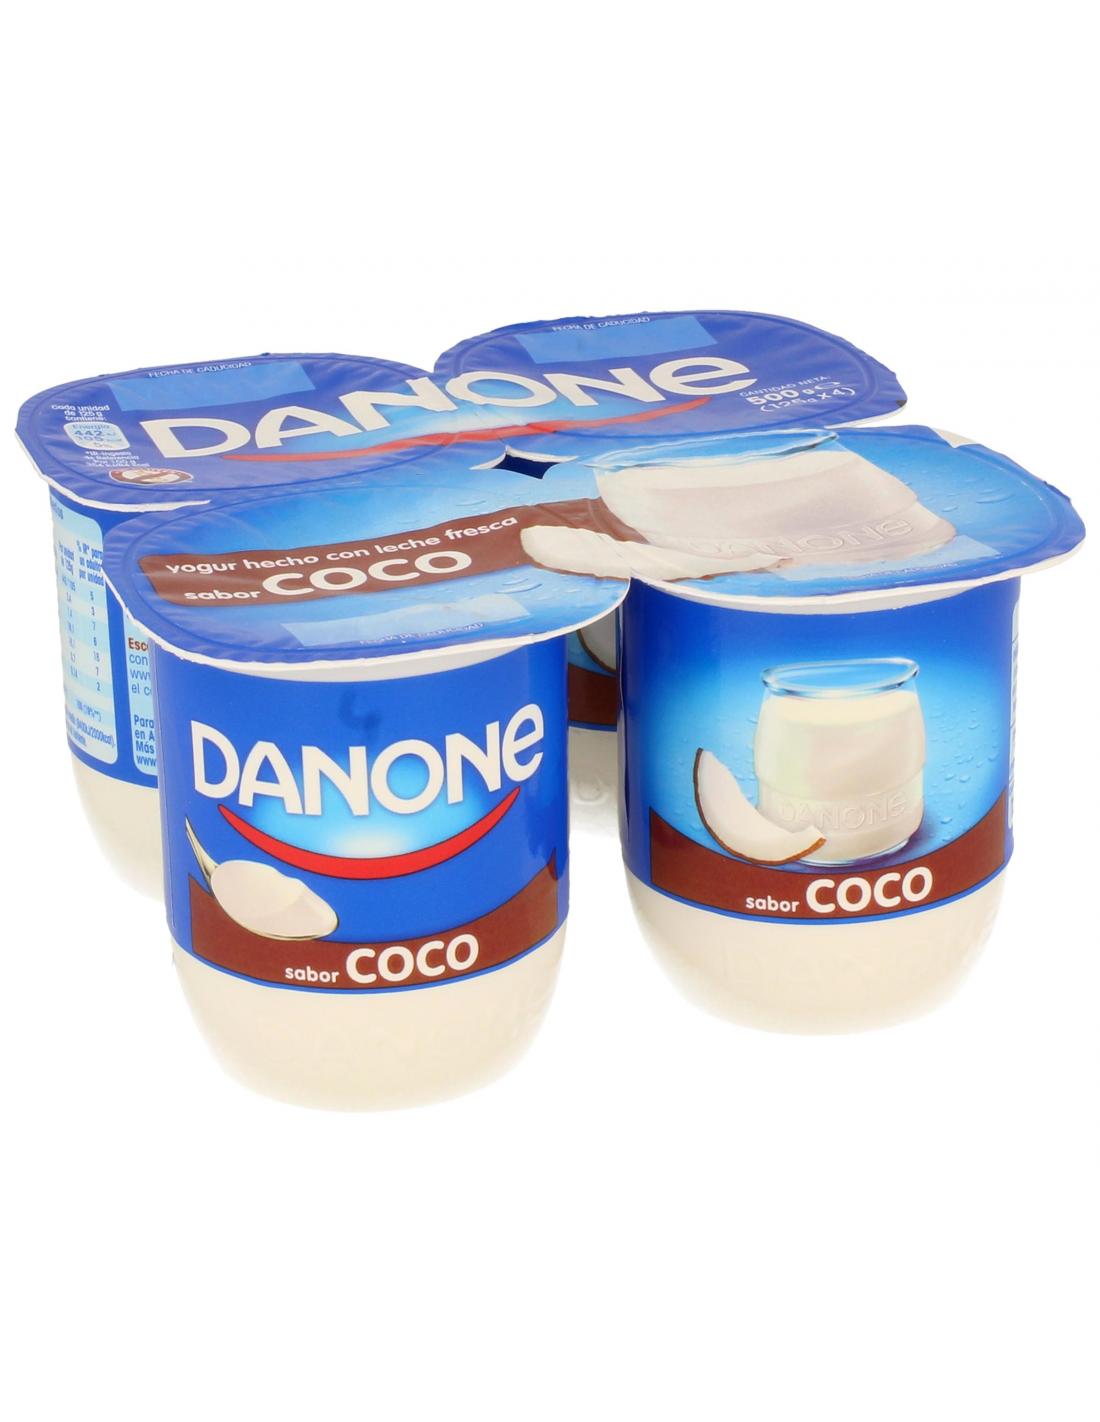 Yogur danone de coco (pack 4